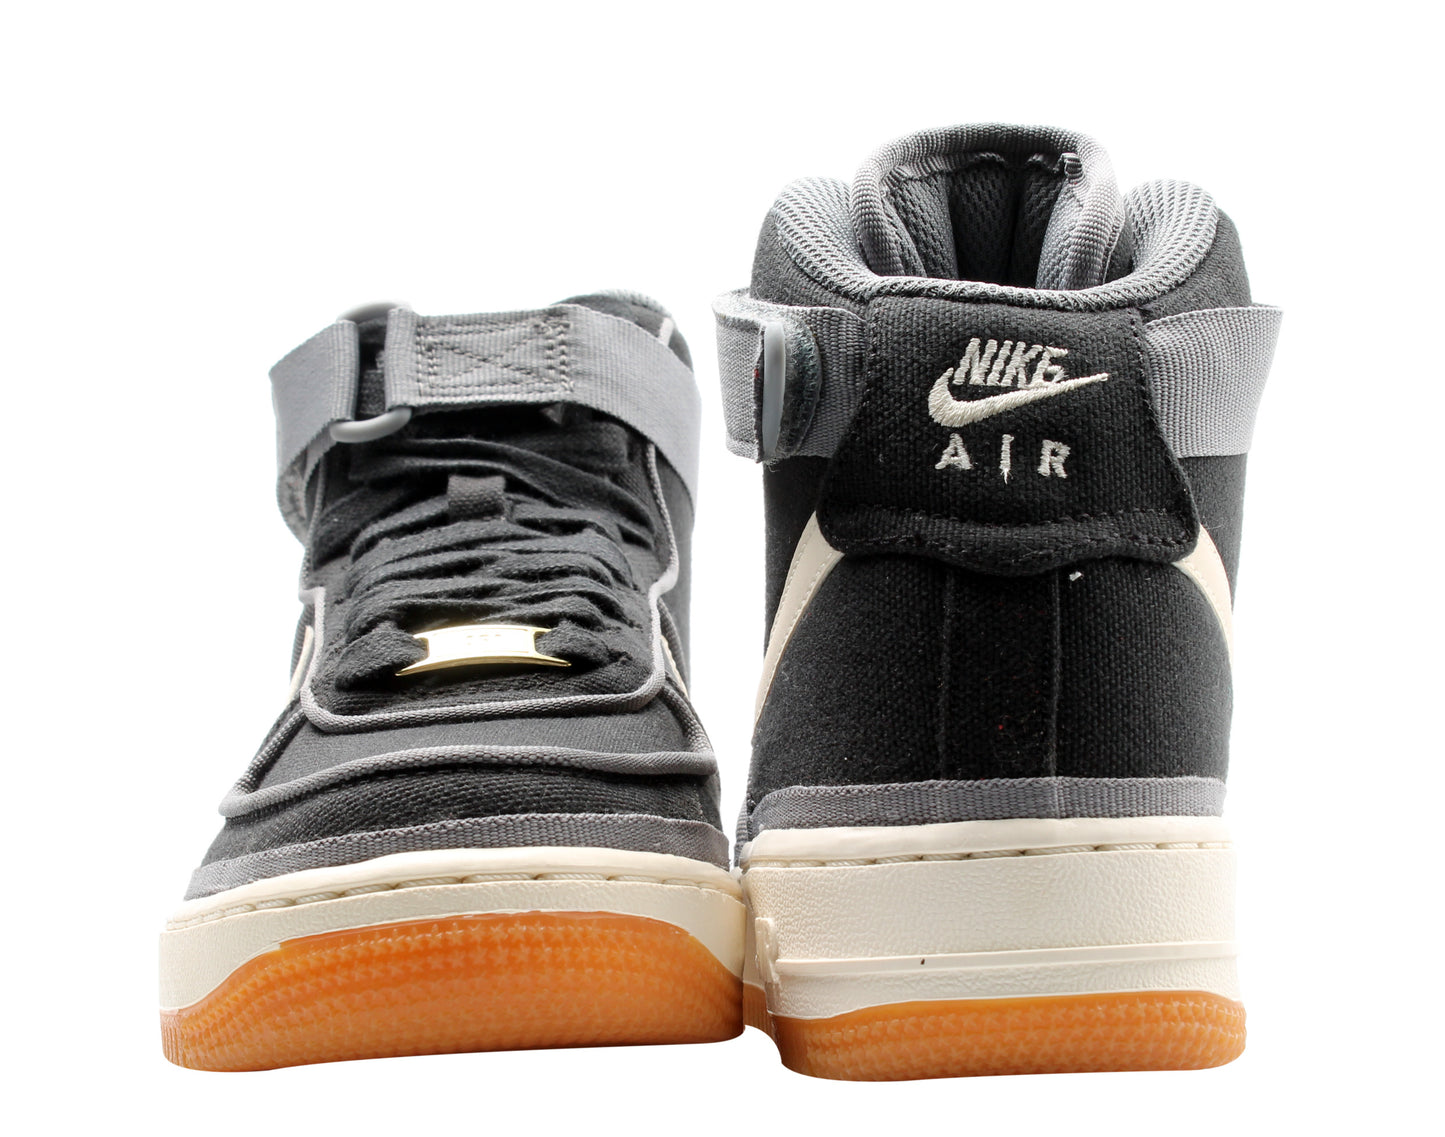 Nike Air Force 1 High LV8 (GS) Black/Sail Big Kids Basketball Shoes 807617-001